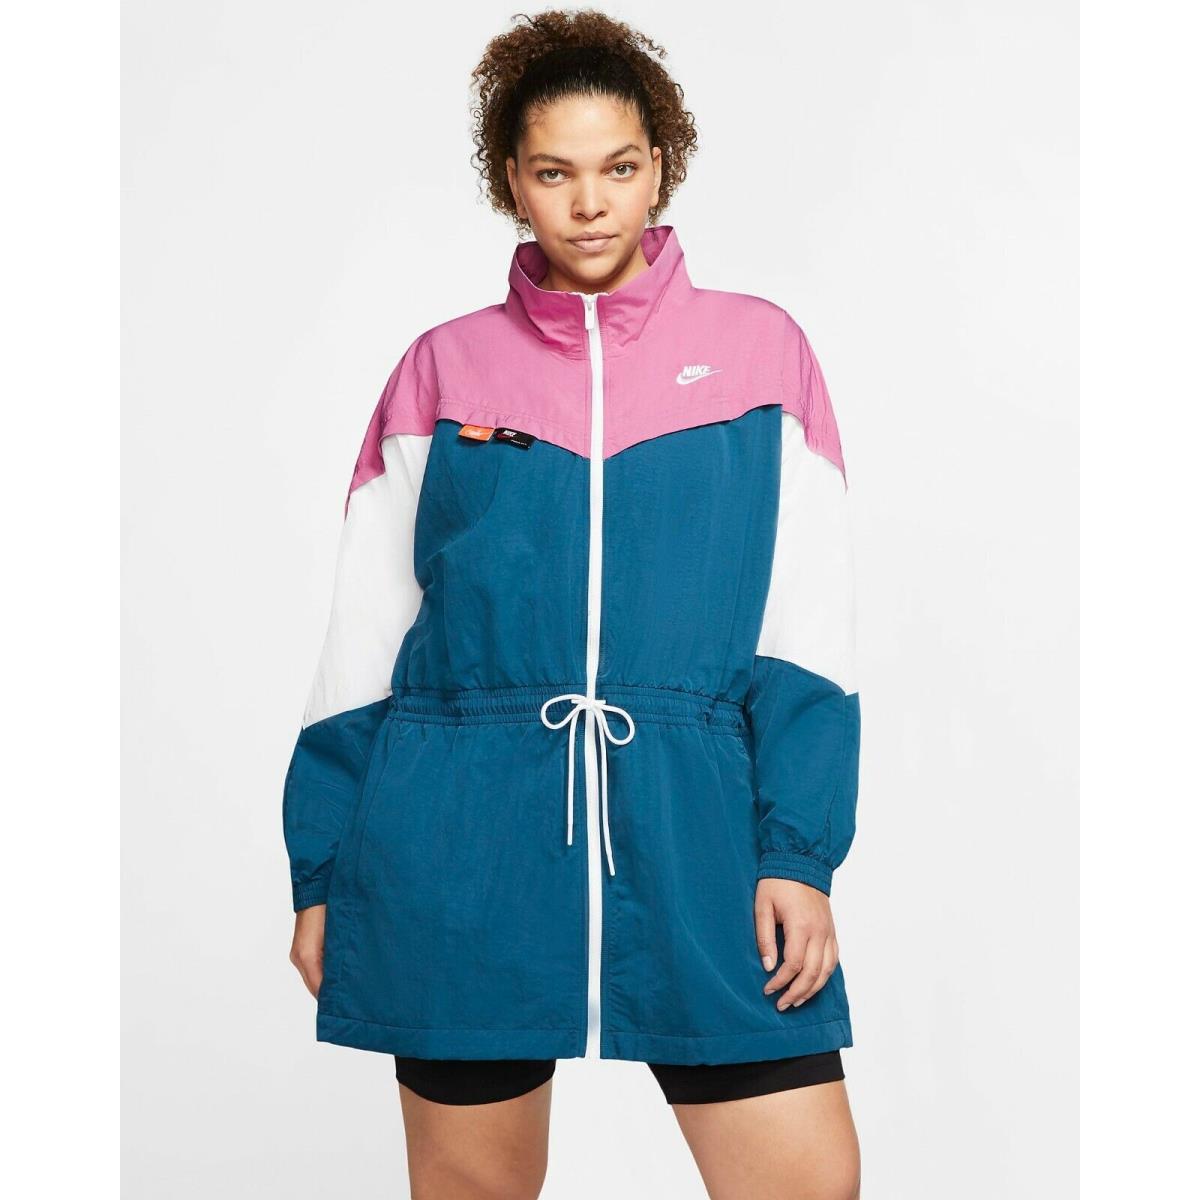 Nike Women`s Woven Track Jacket Plus Size 1X